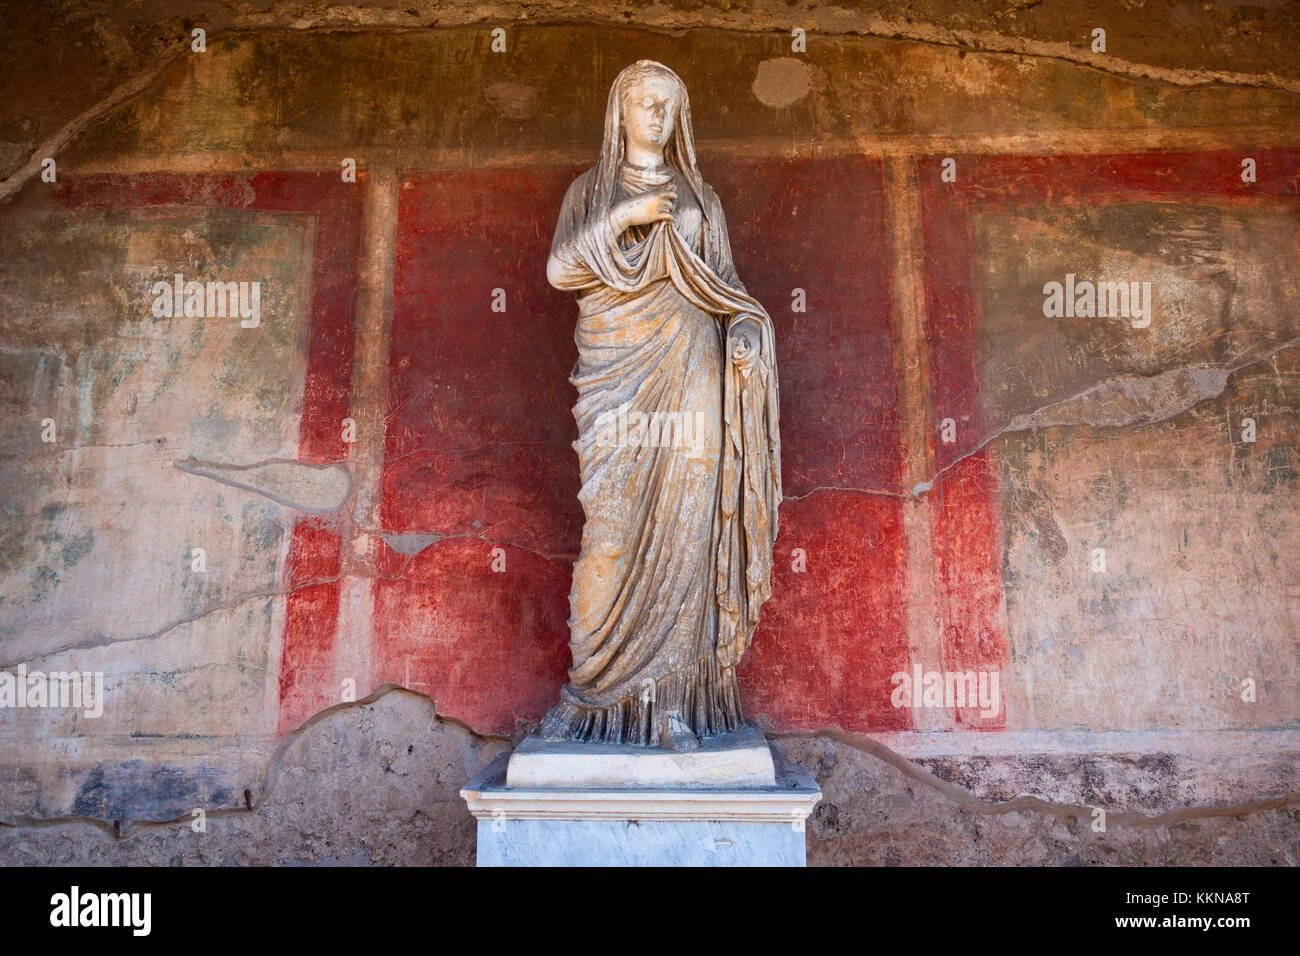 A statue at the Roman ruins at Pompeii near Naples and Mt. Vesuvius, Campania, Italy. Stock Photo